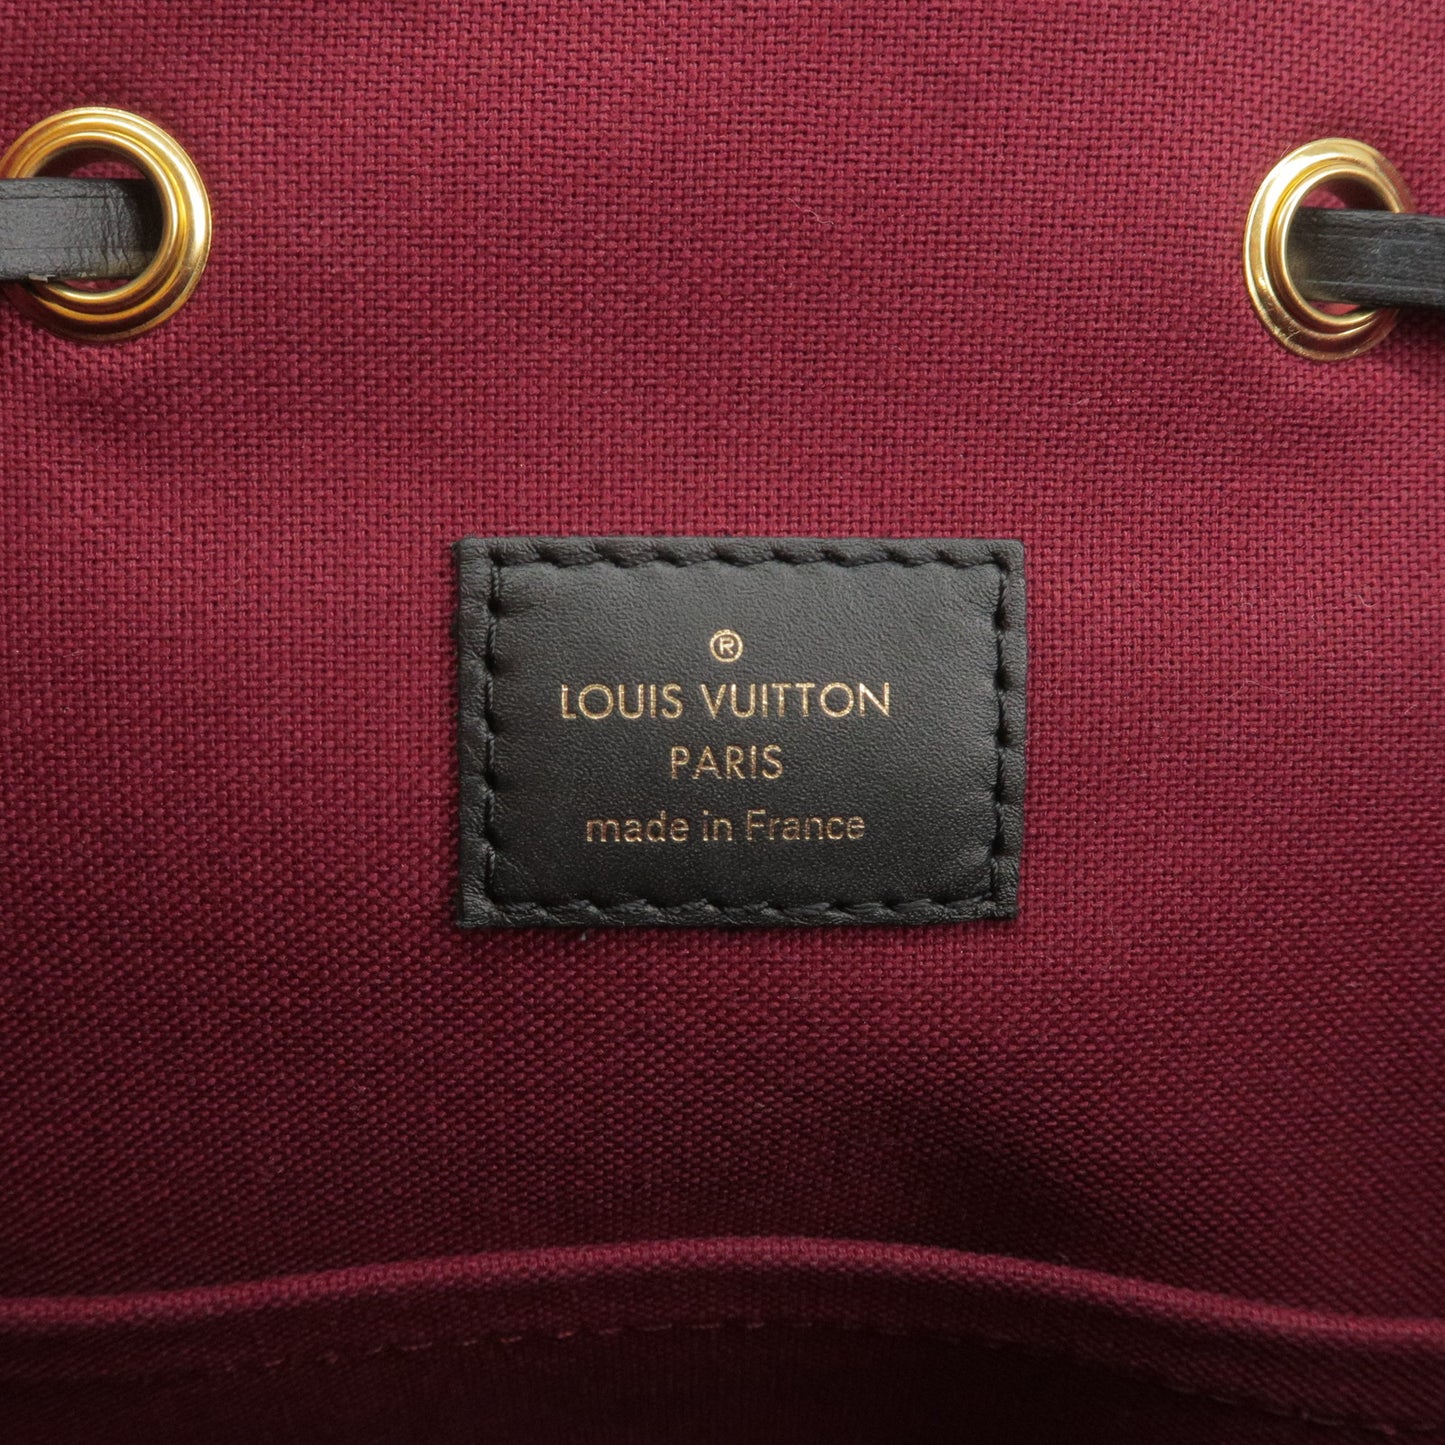 Shop Louis Vuitton Montsouris pm (M45515) by lifeisfun